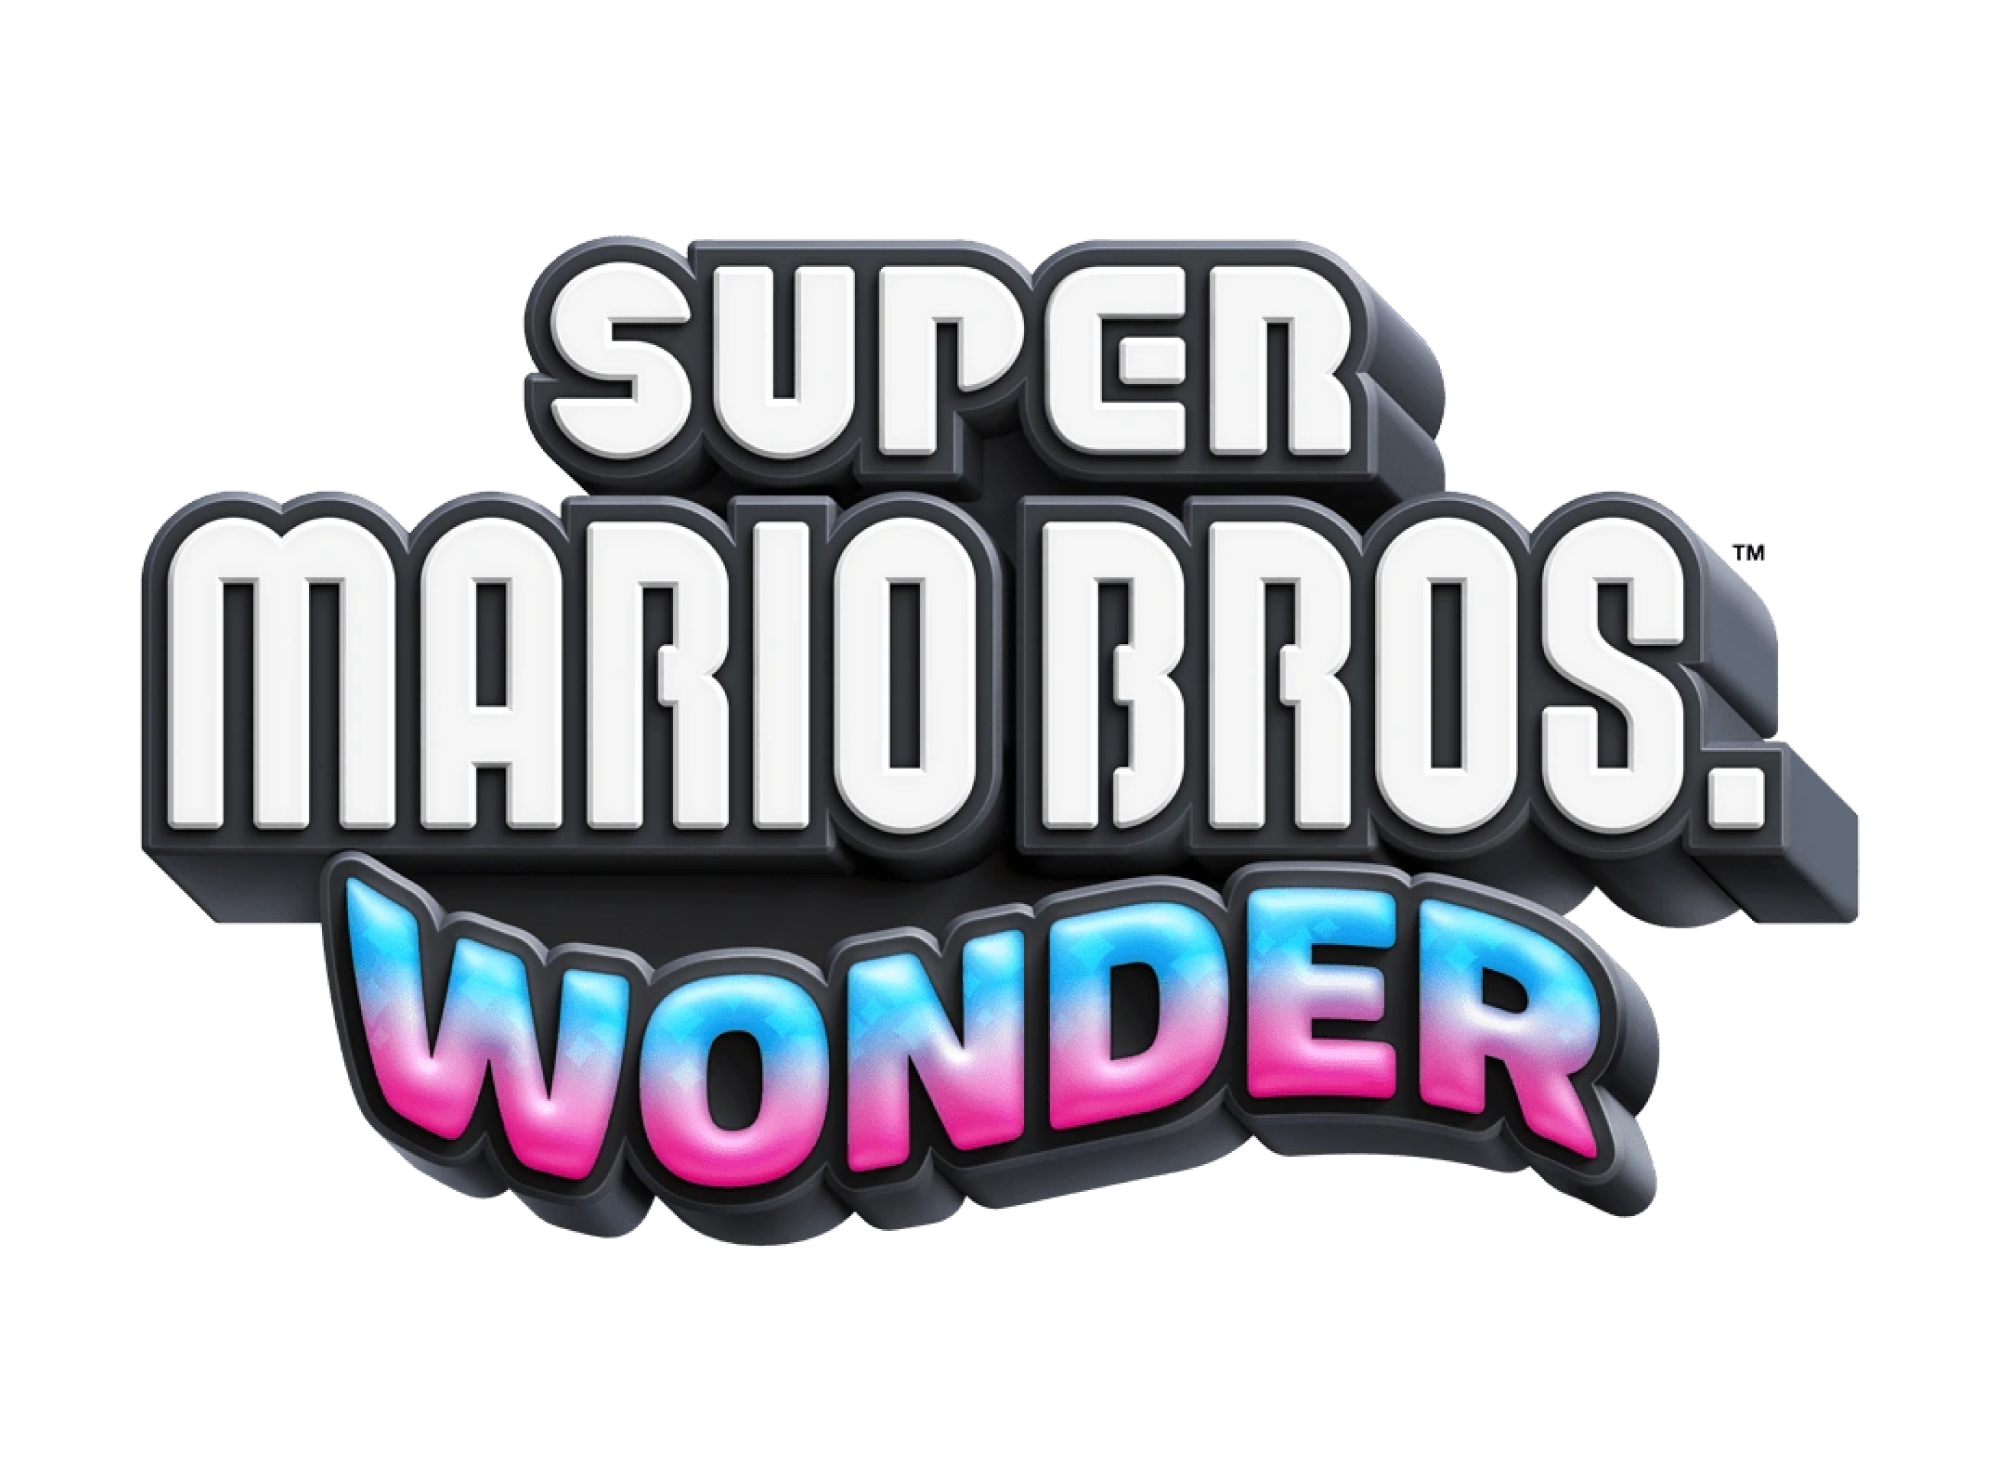 Download Super Mario Bros wonder Logo PNG and Vector (PDF, SVG, Ai, EPS ...